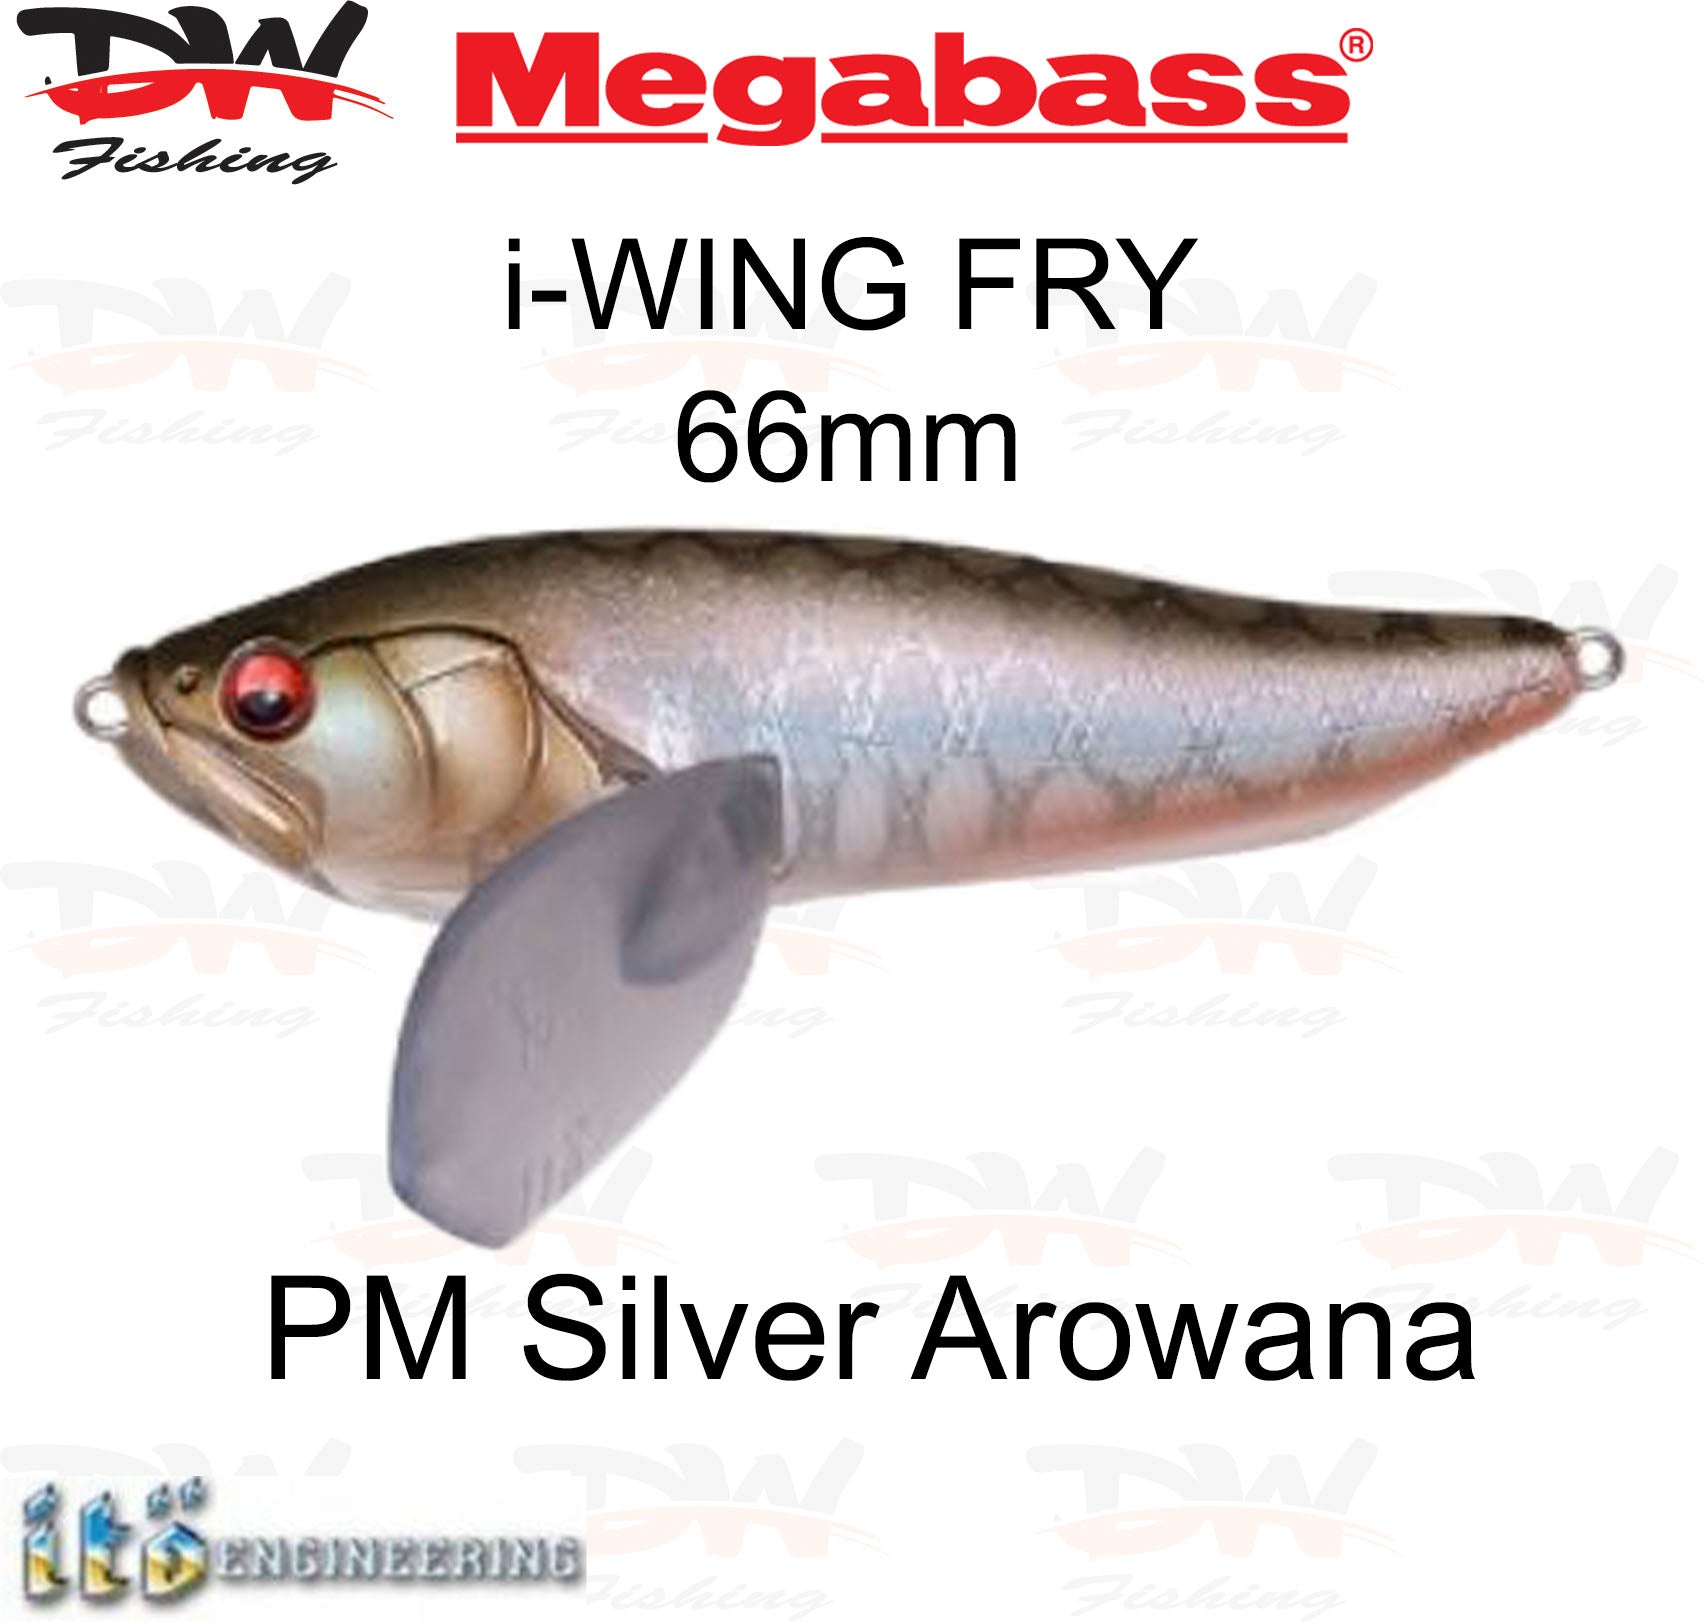 Megabass i-WING FRY surface lure single colour PM Silver Arowana